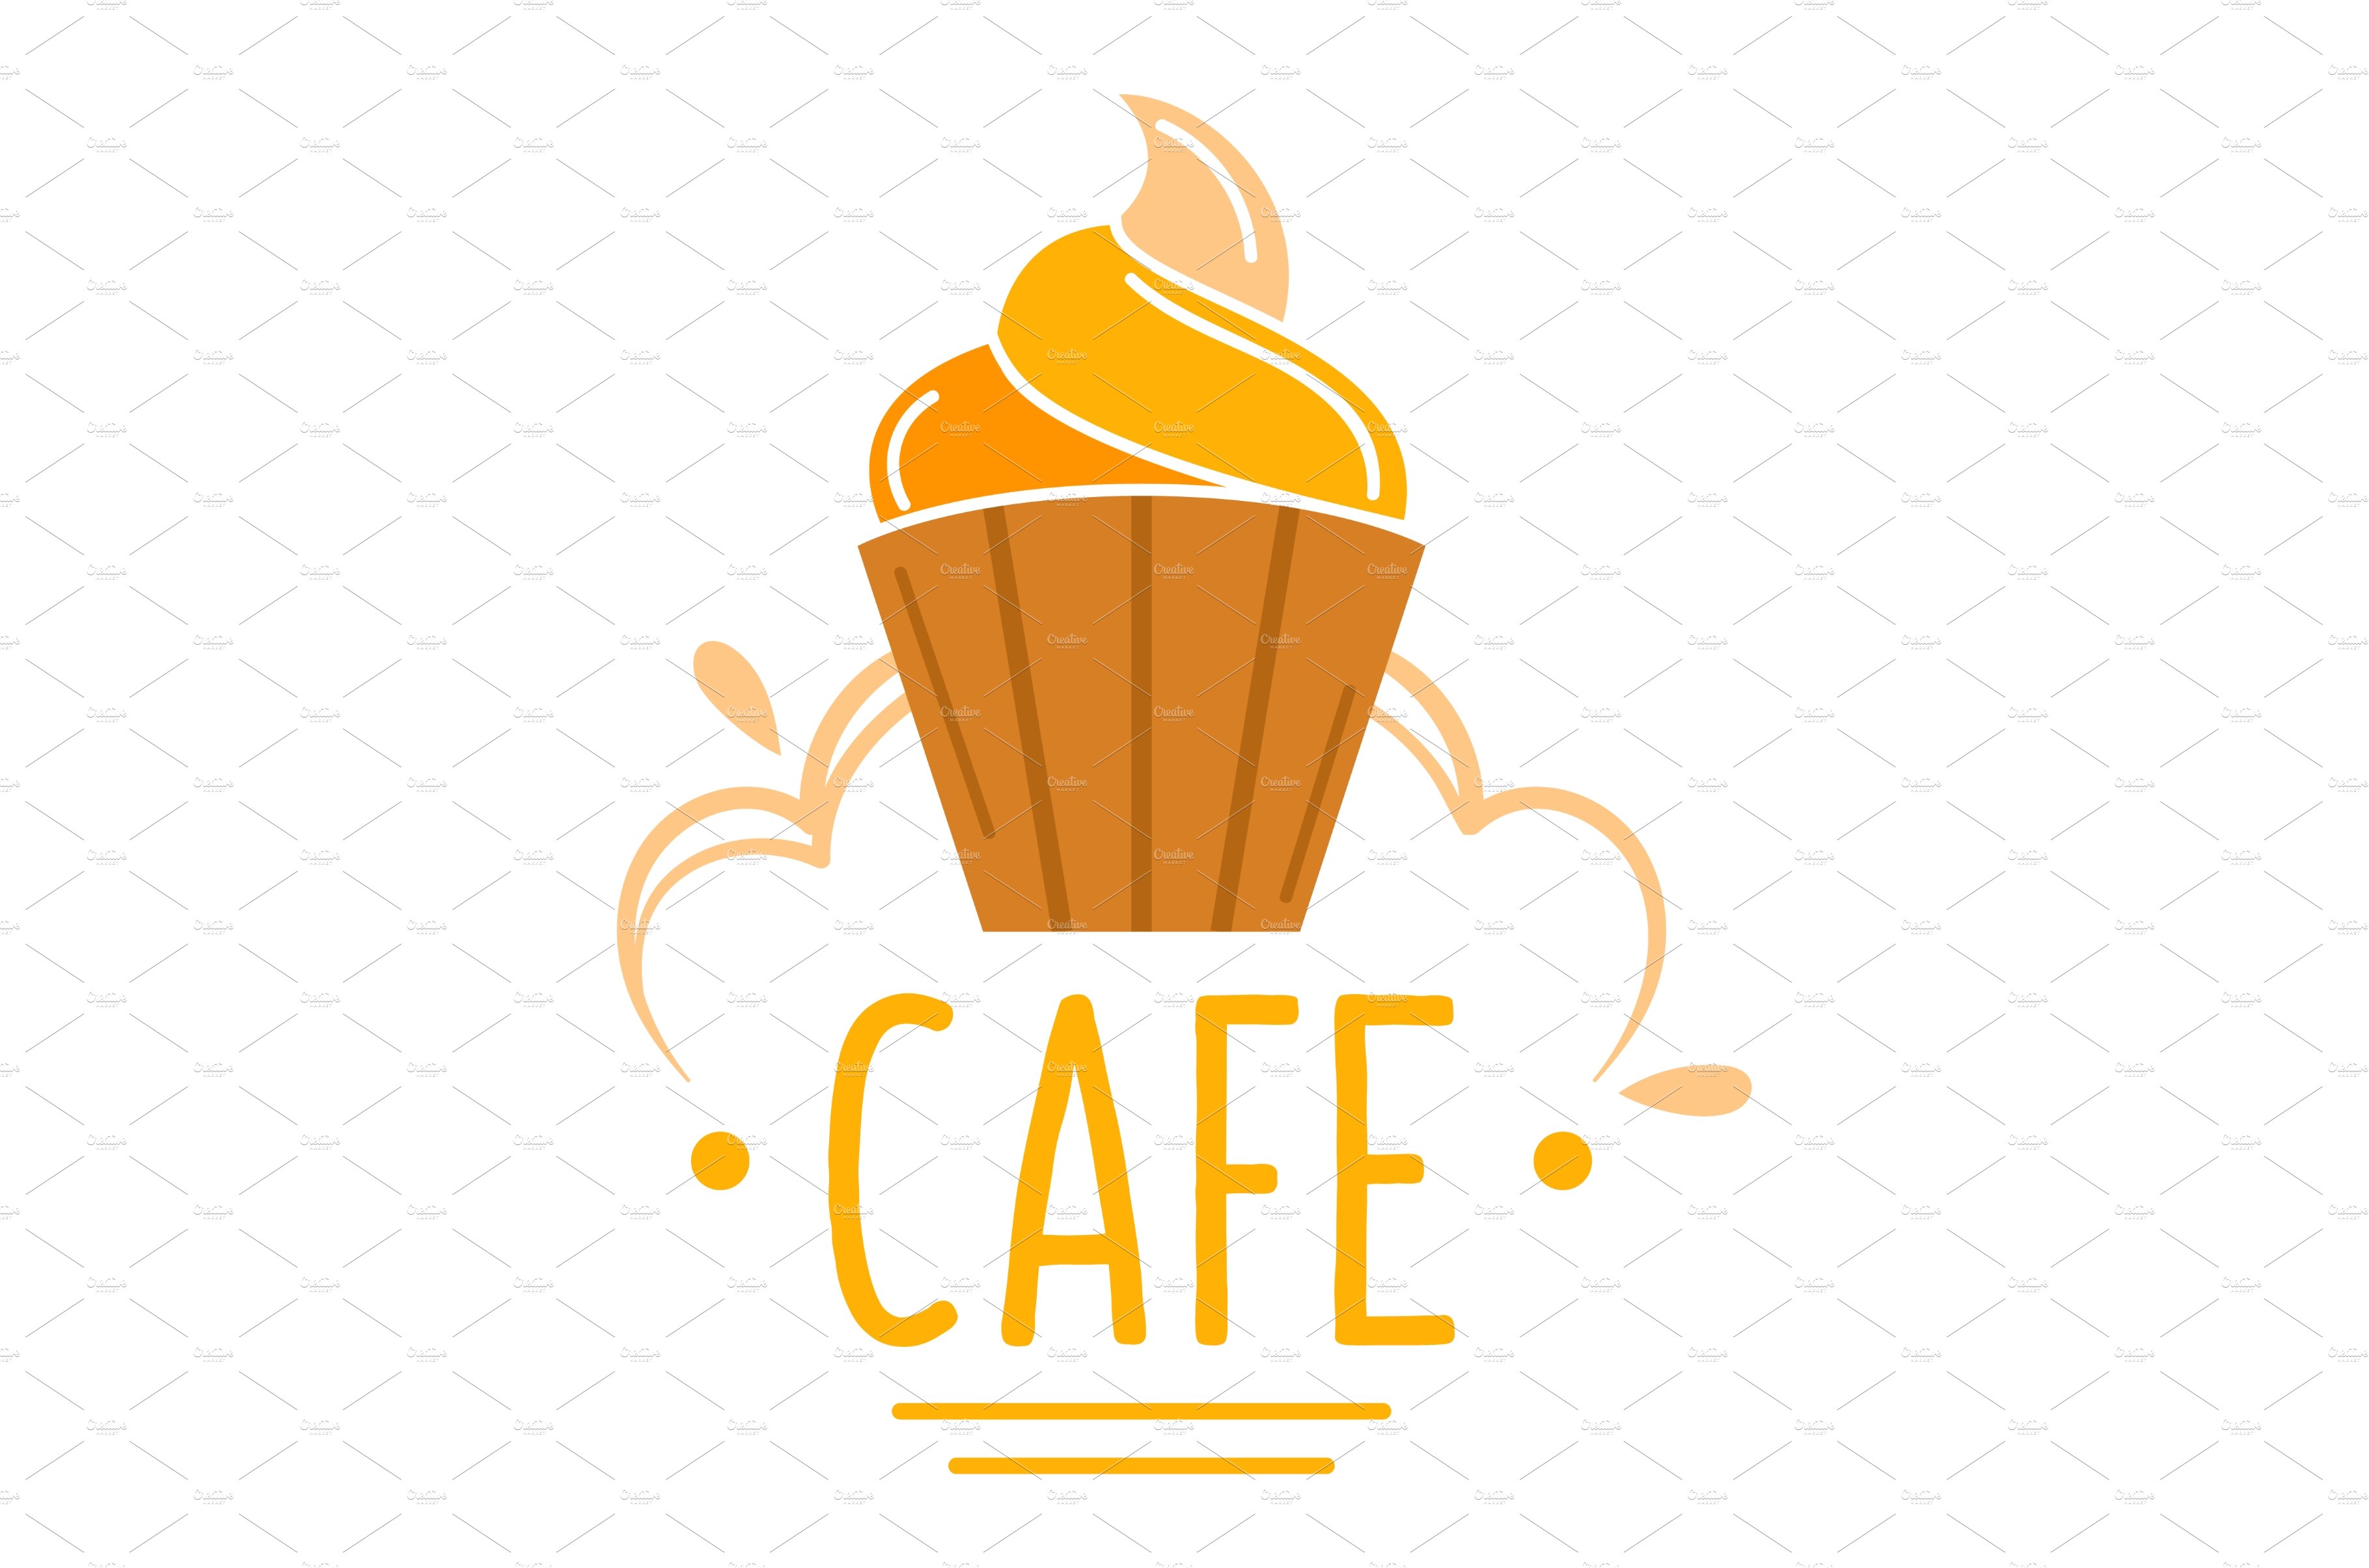 Cupcake symbol above cafe sign logo cover image.